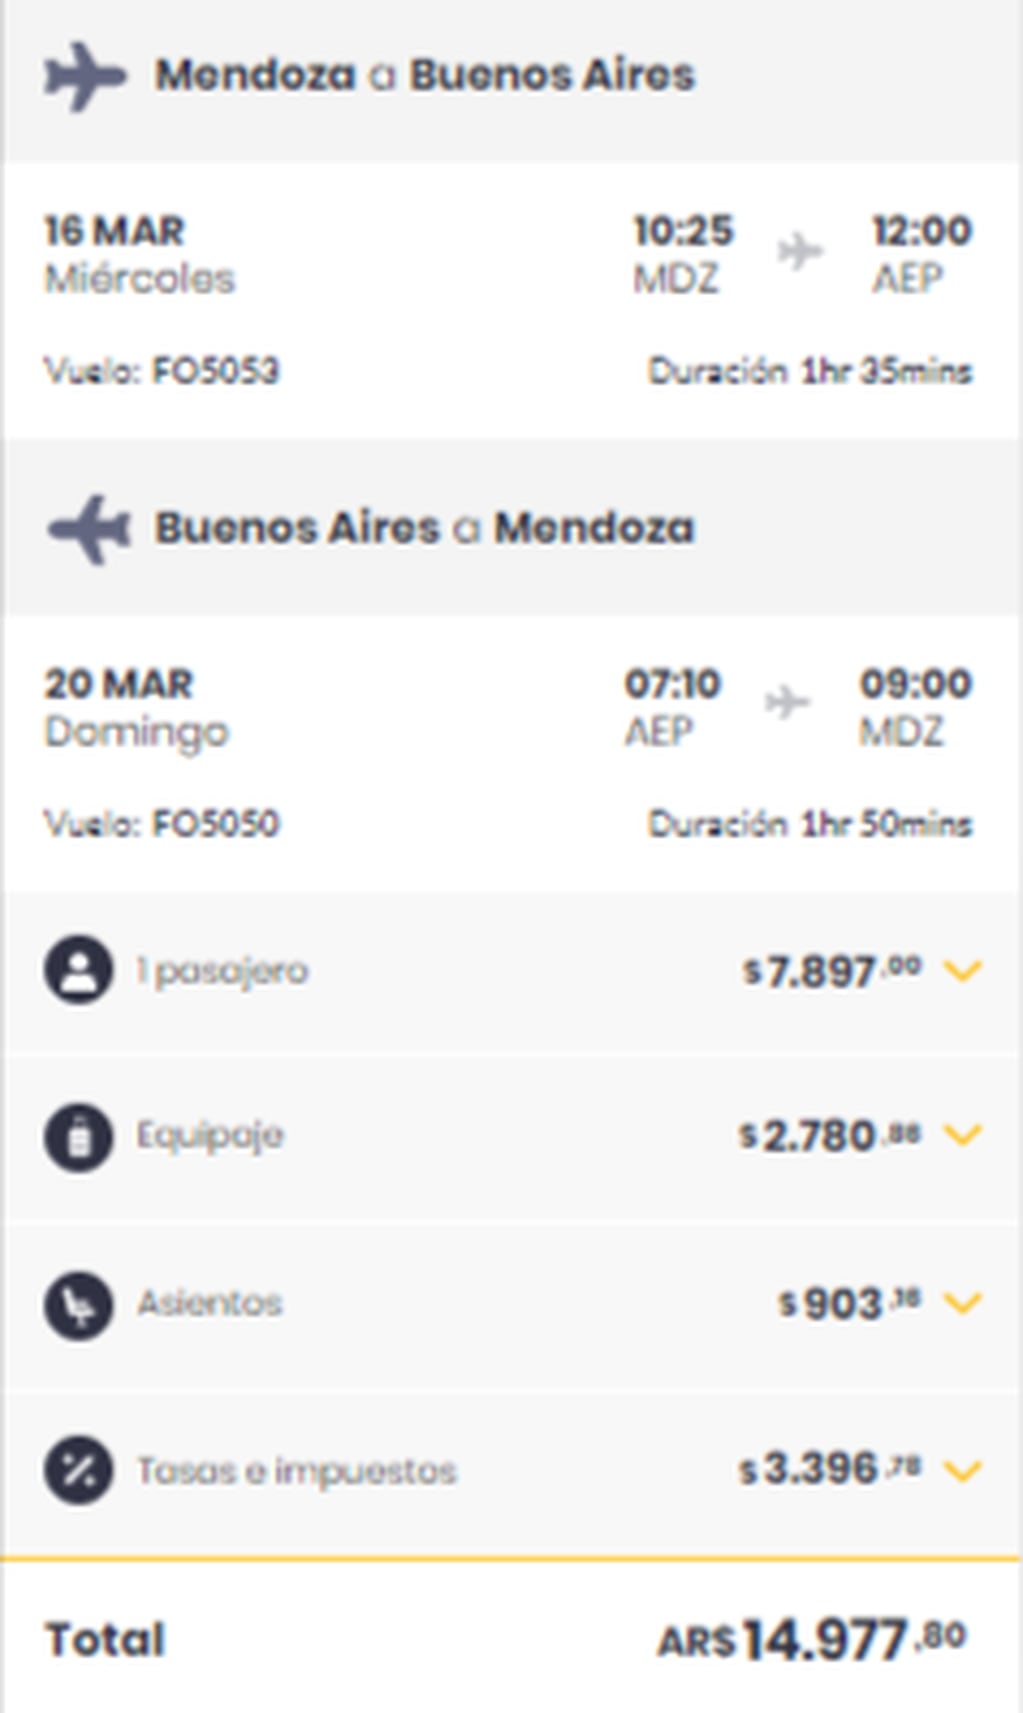 Costos de un pasaje a Buenos Aires